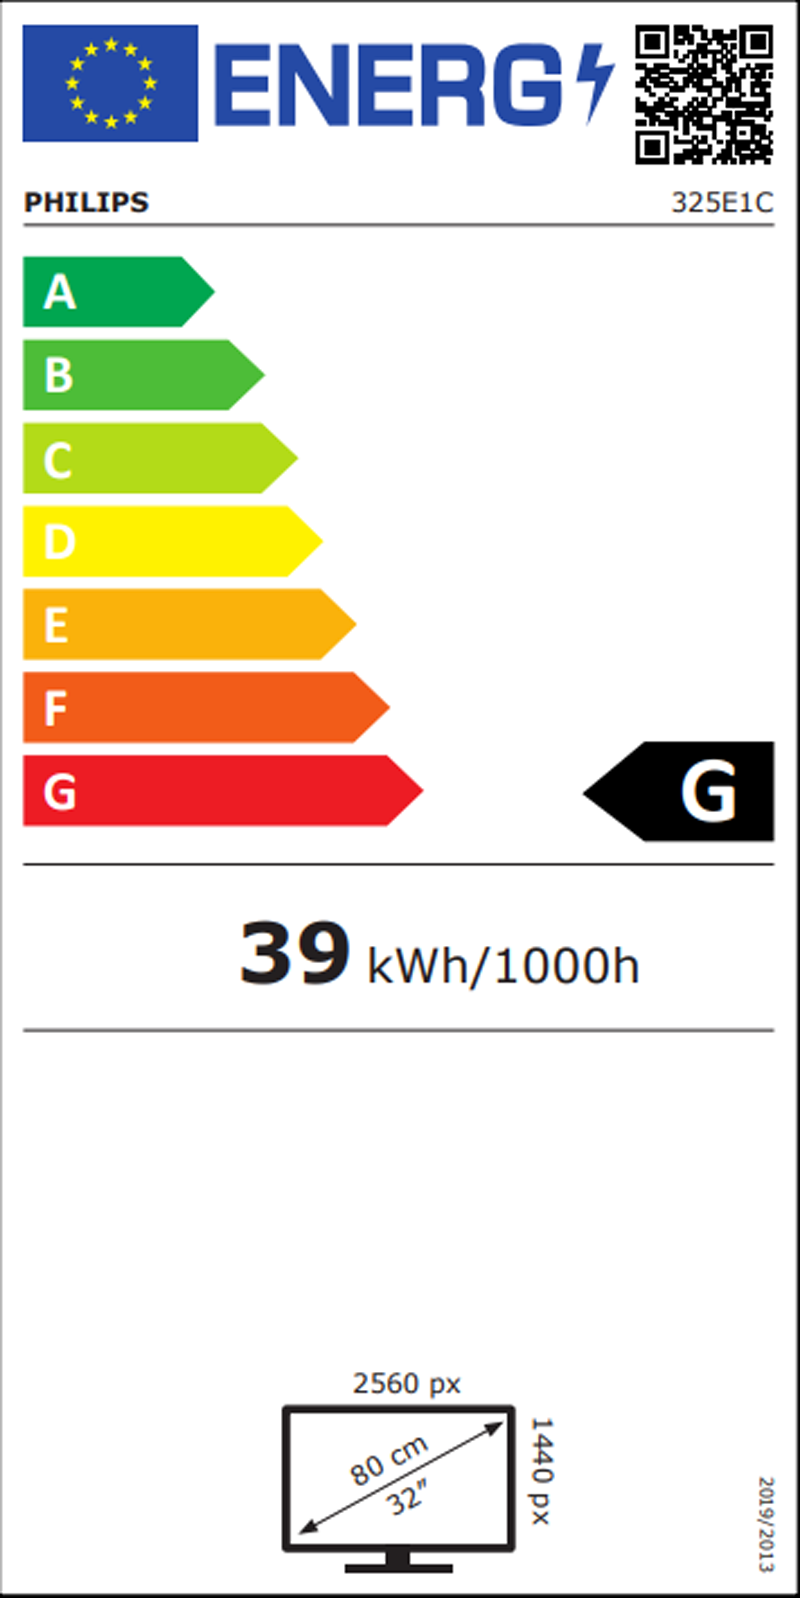 Energetski certifikat G